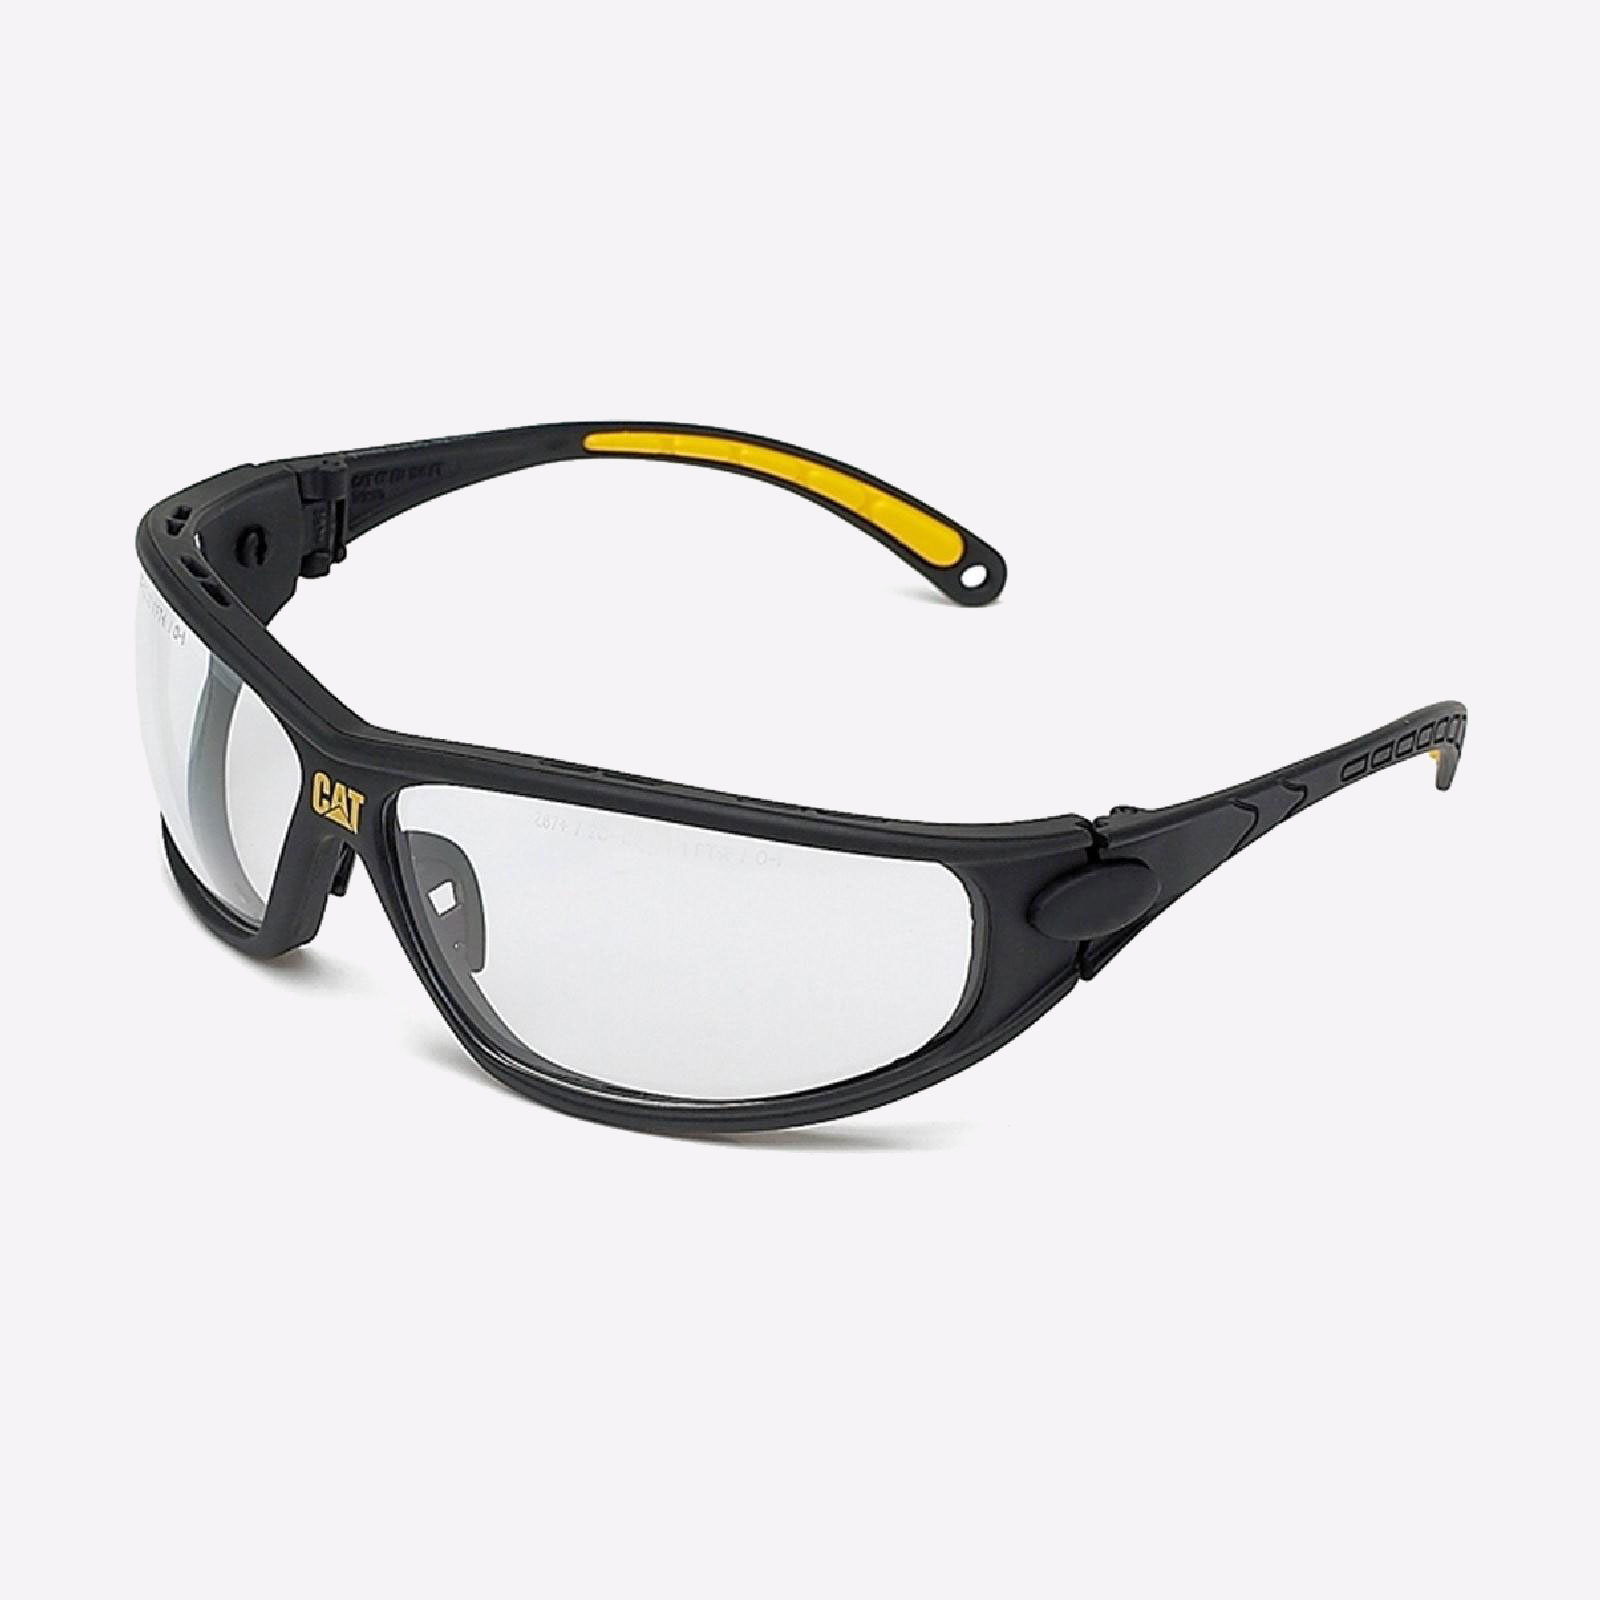 Caterpillar Tread Protective Eyewear - GRD-14216-17791-01